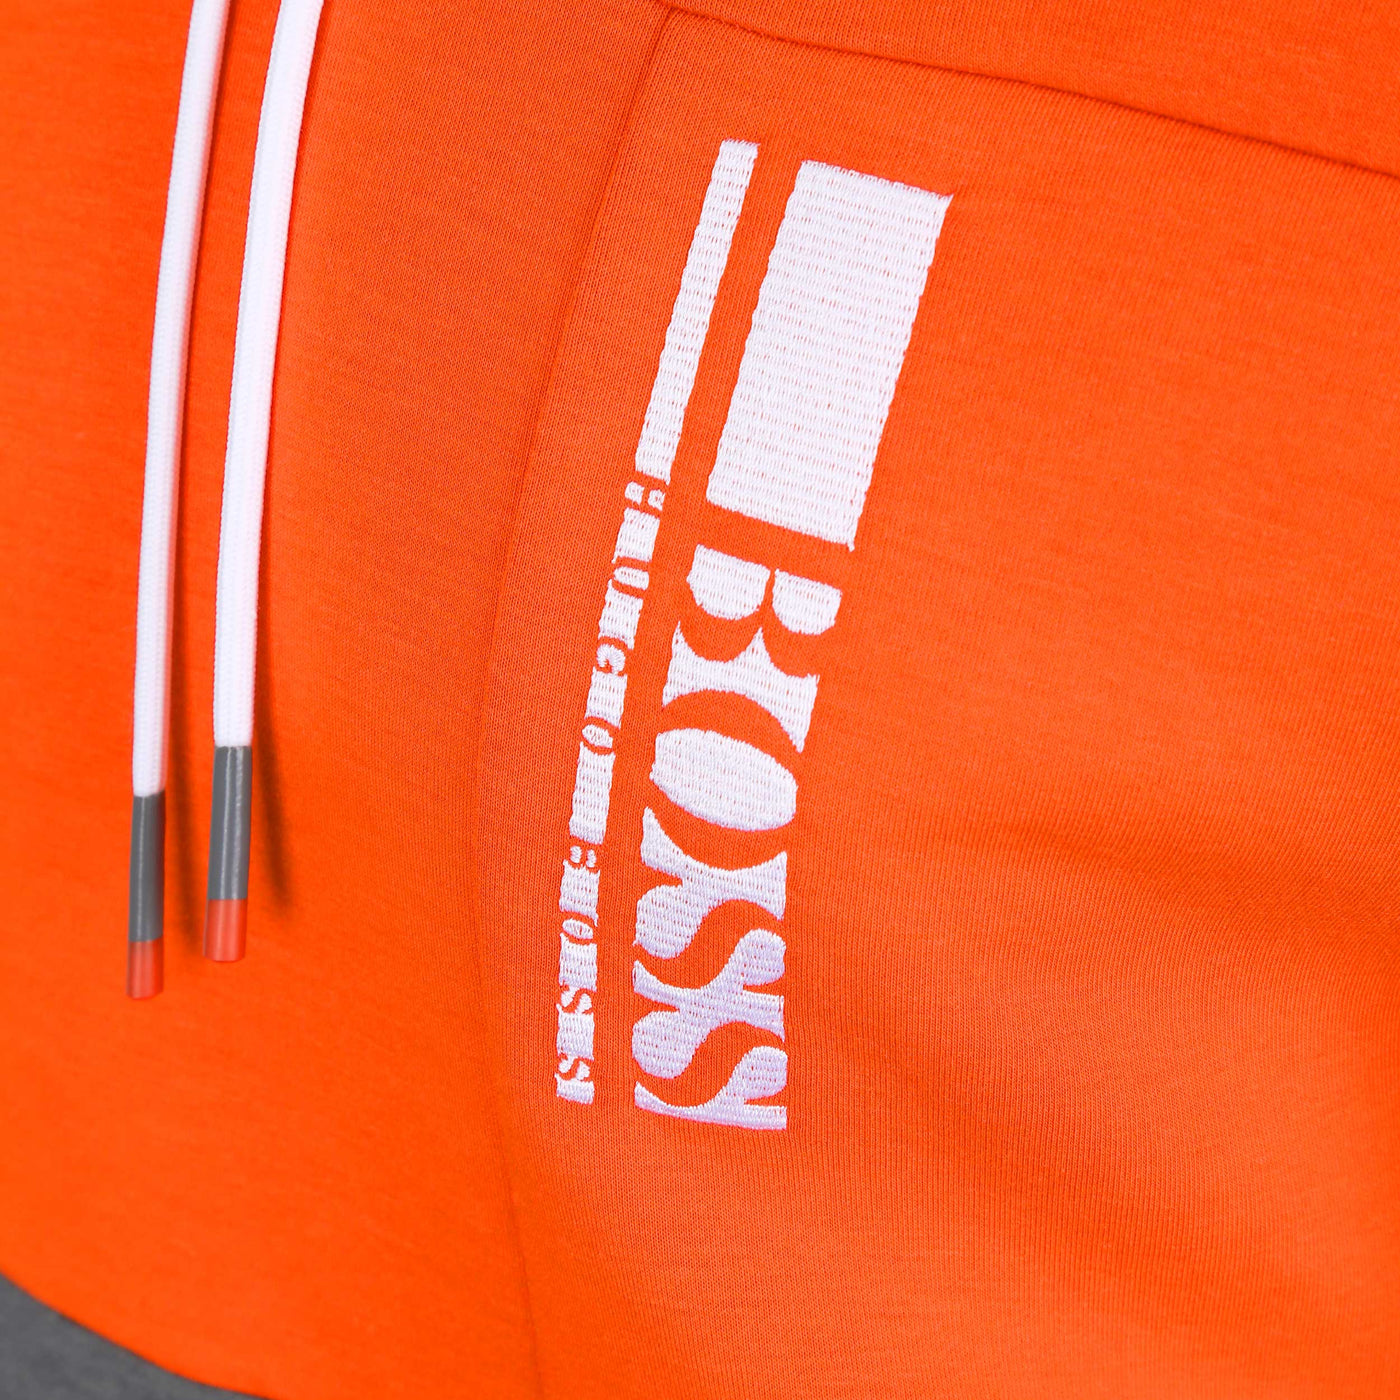 BOSS Swoody 1 Sweatshirt in Grey and Orange